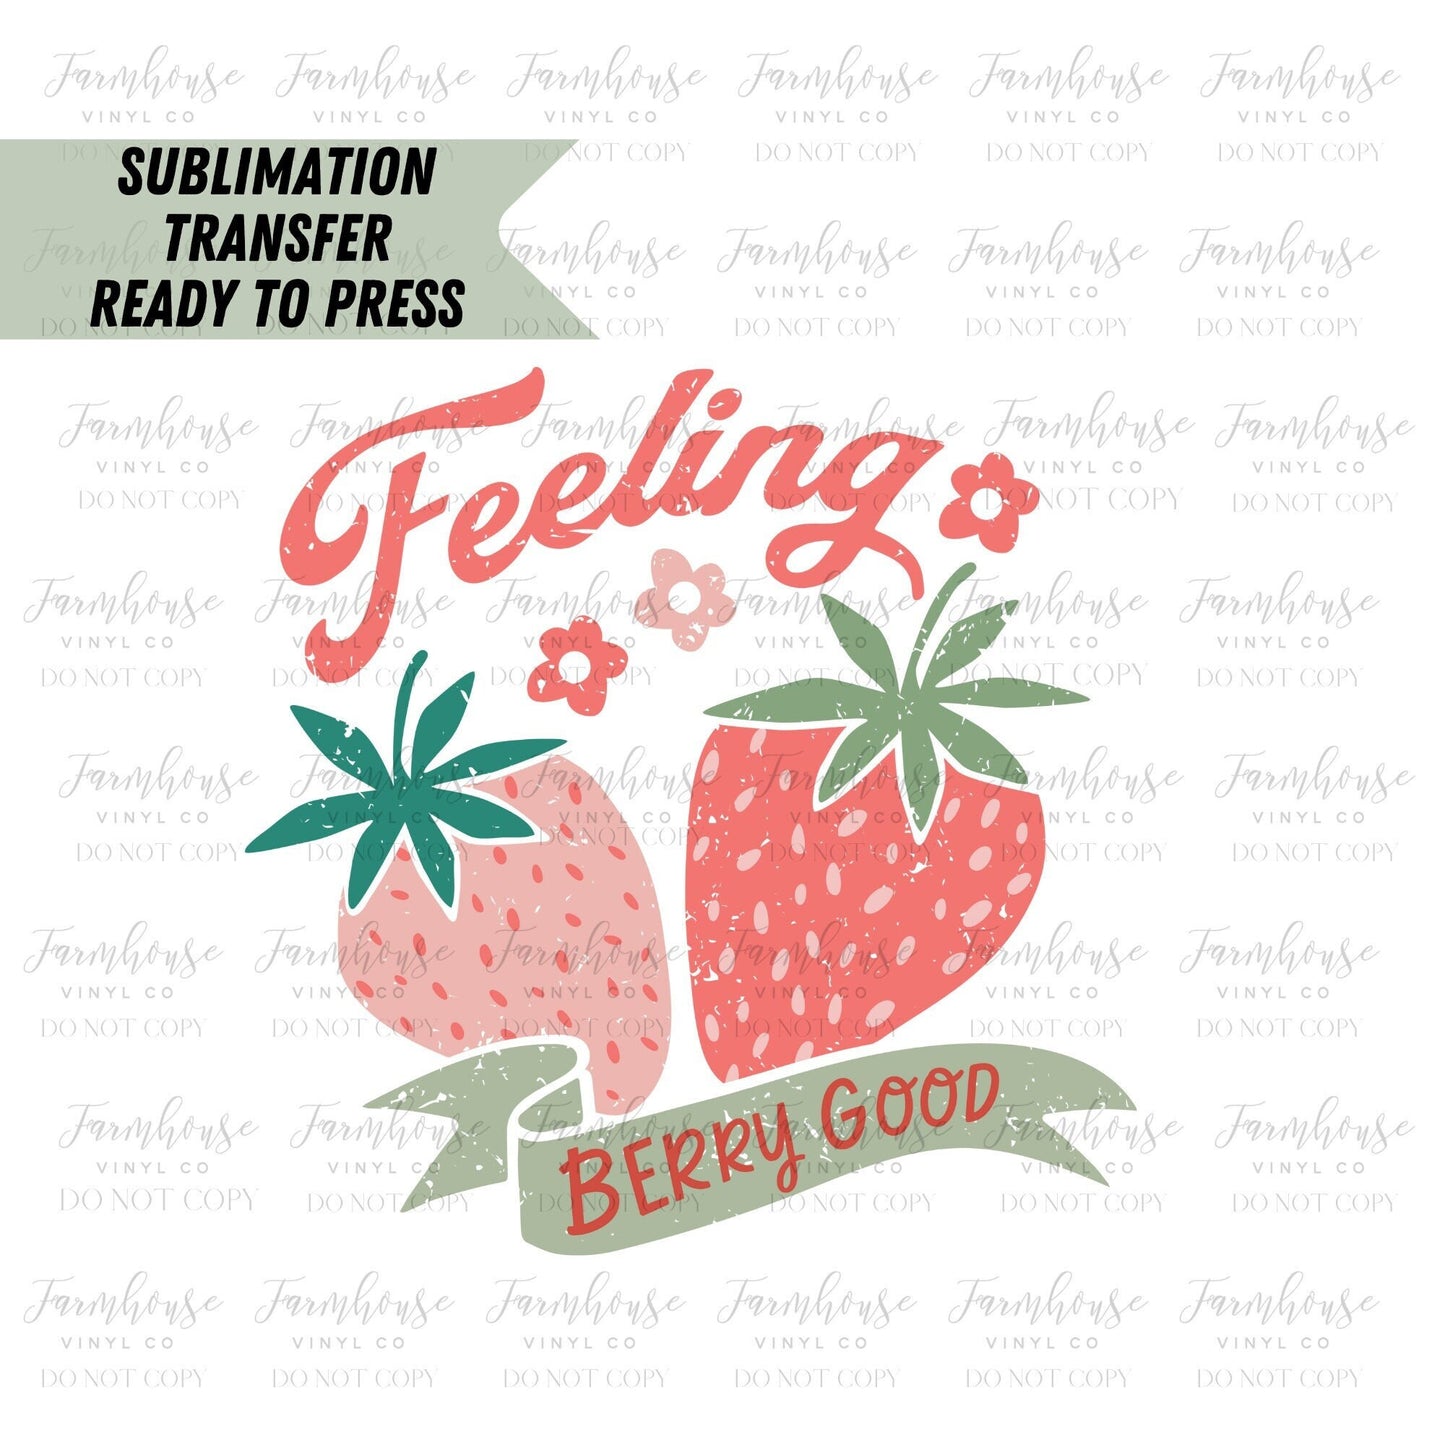 Feeling Berry Good Strawberries Ready to Press Sublimation Transfer - Farmhouse Vinyl Co